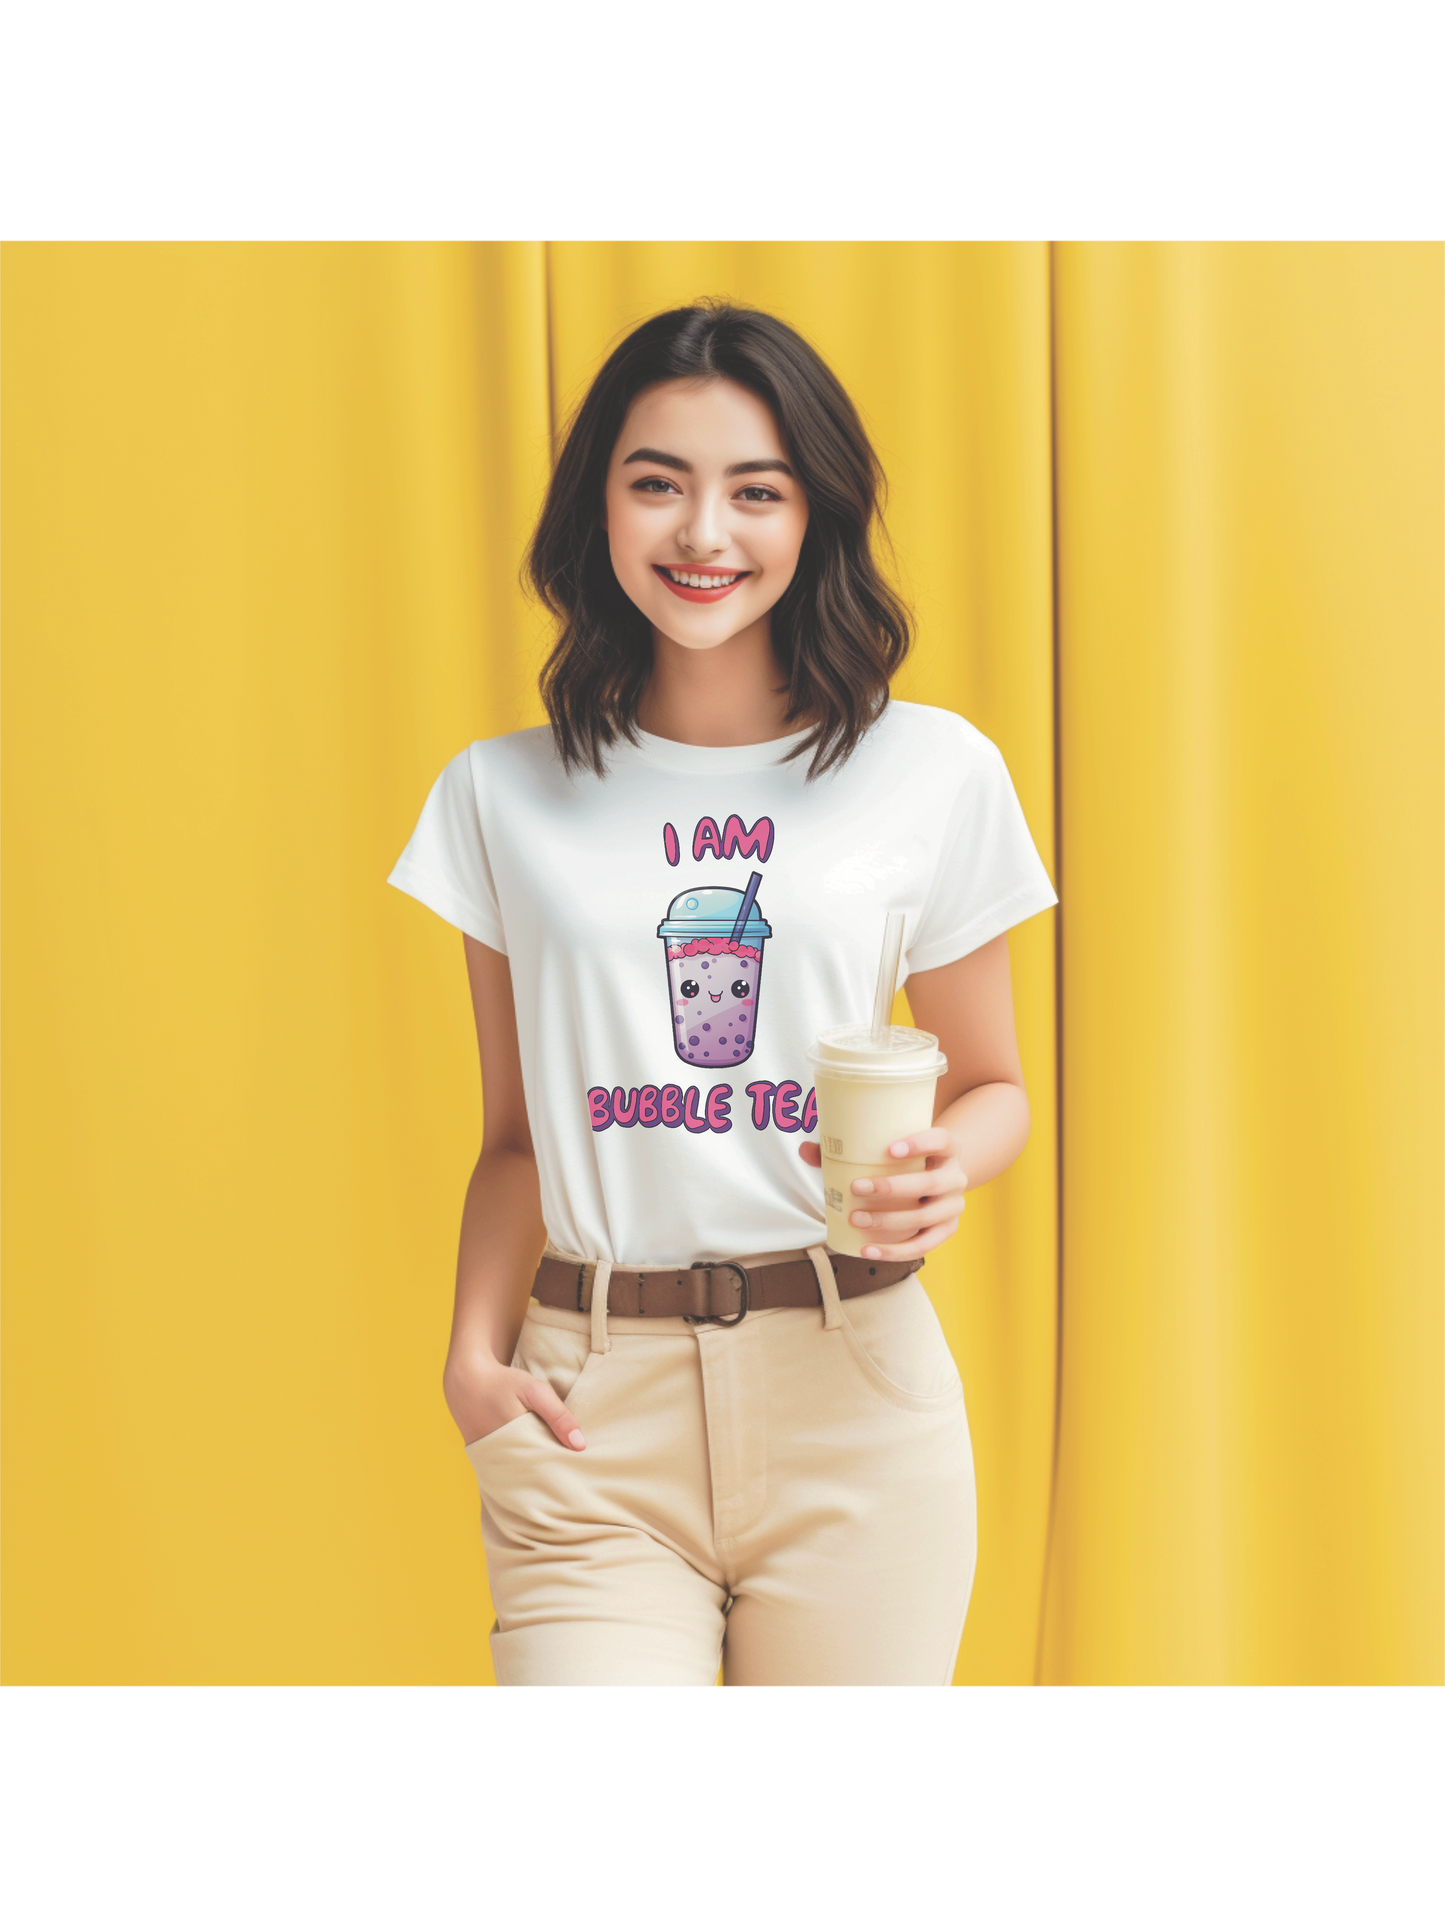 I am Bubble Tea, Graphic T-Shirt, Cute Kawaii Silly